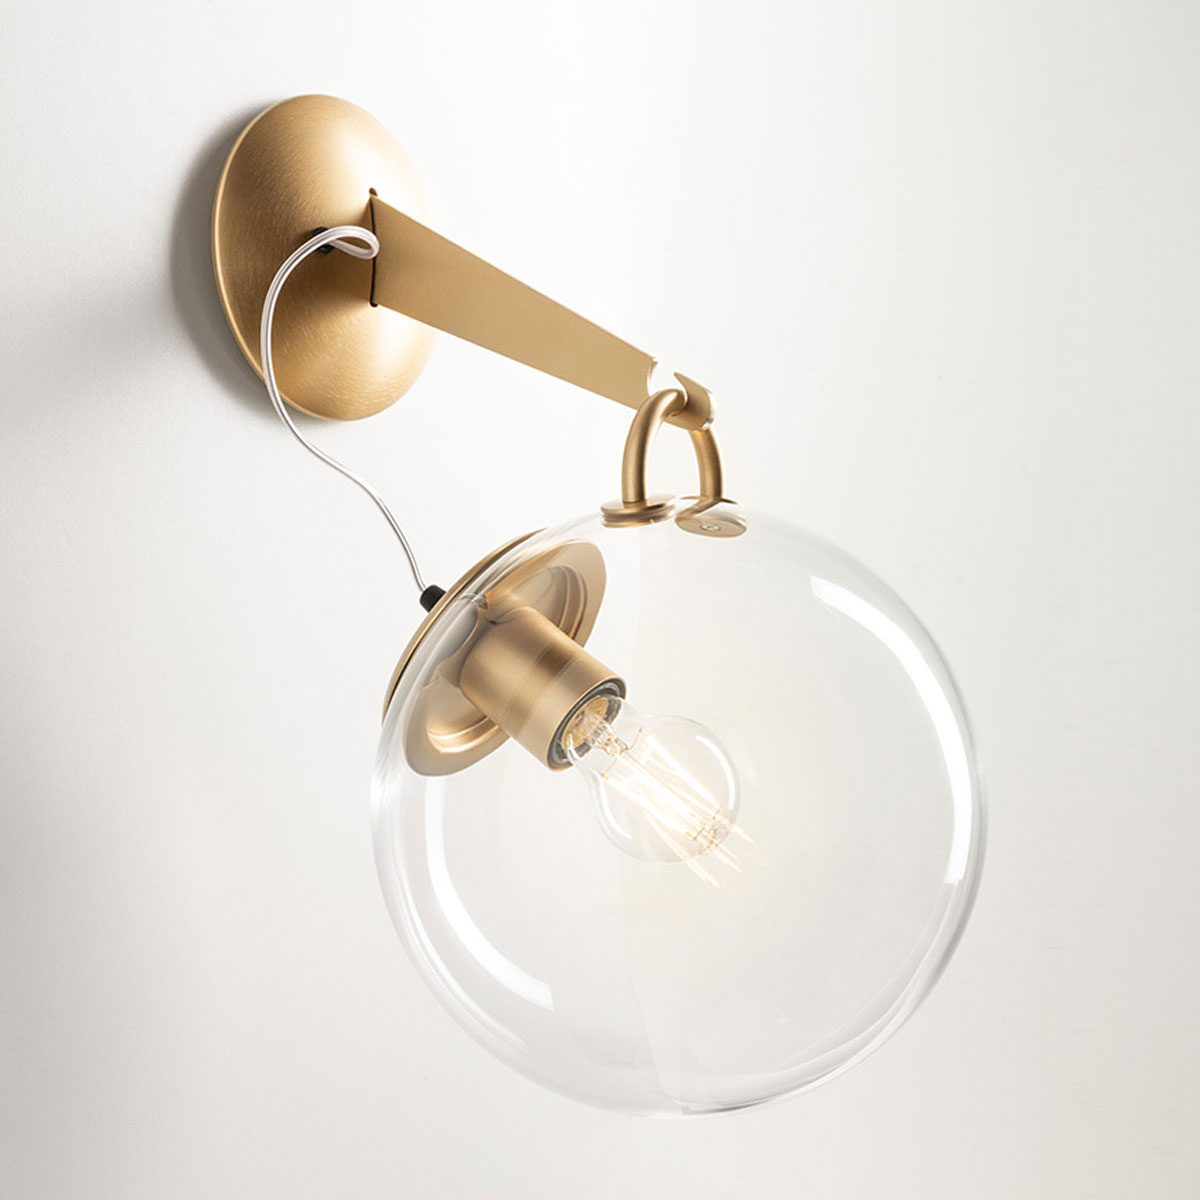 Omtrek Illustreren nieuwigheid Artemide Miconos | Design wandlamp glazen bol | LUMZ at Work